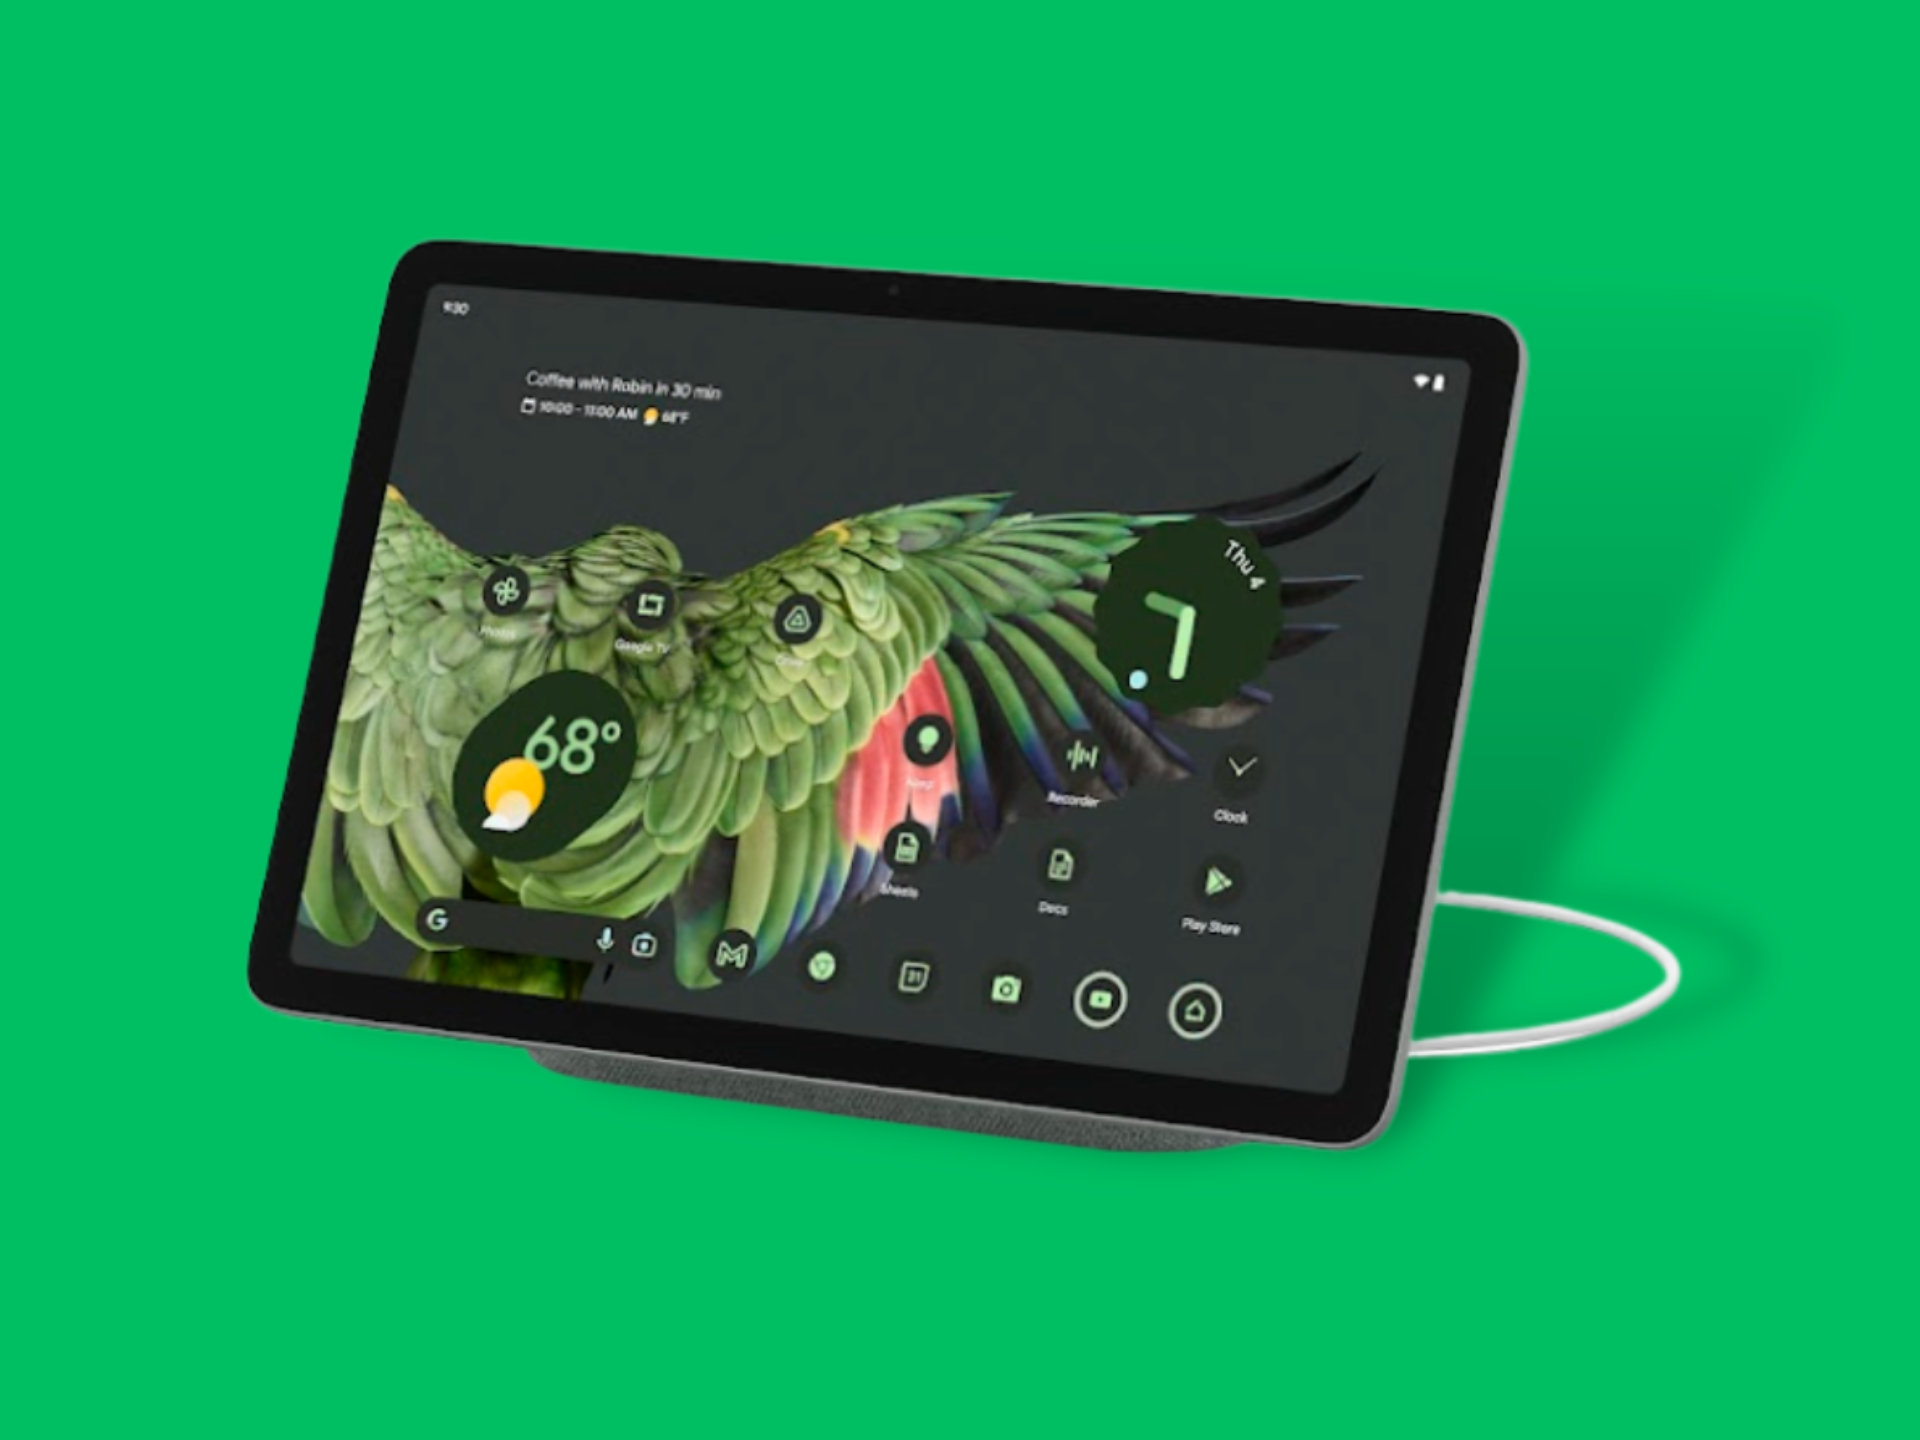 LI-Google-Pixel-tablet-on-green-background